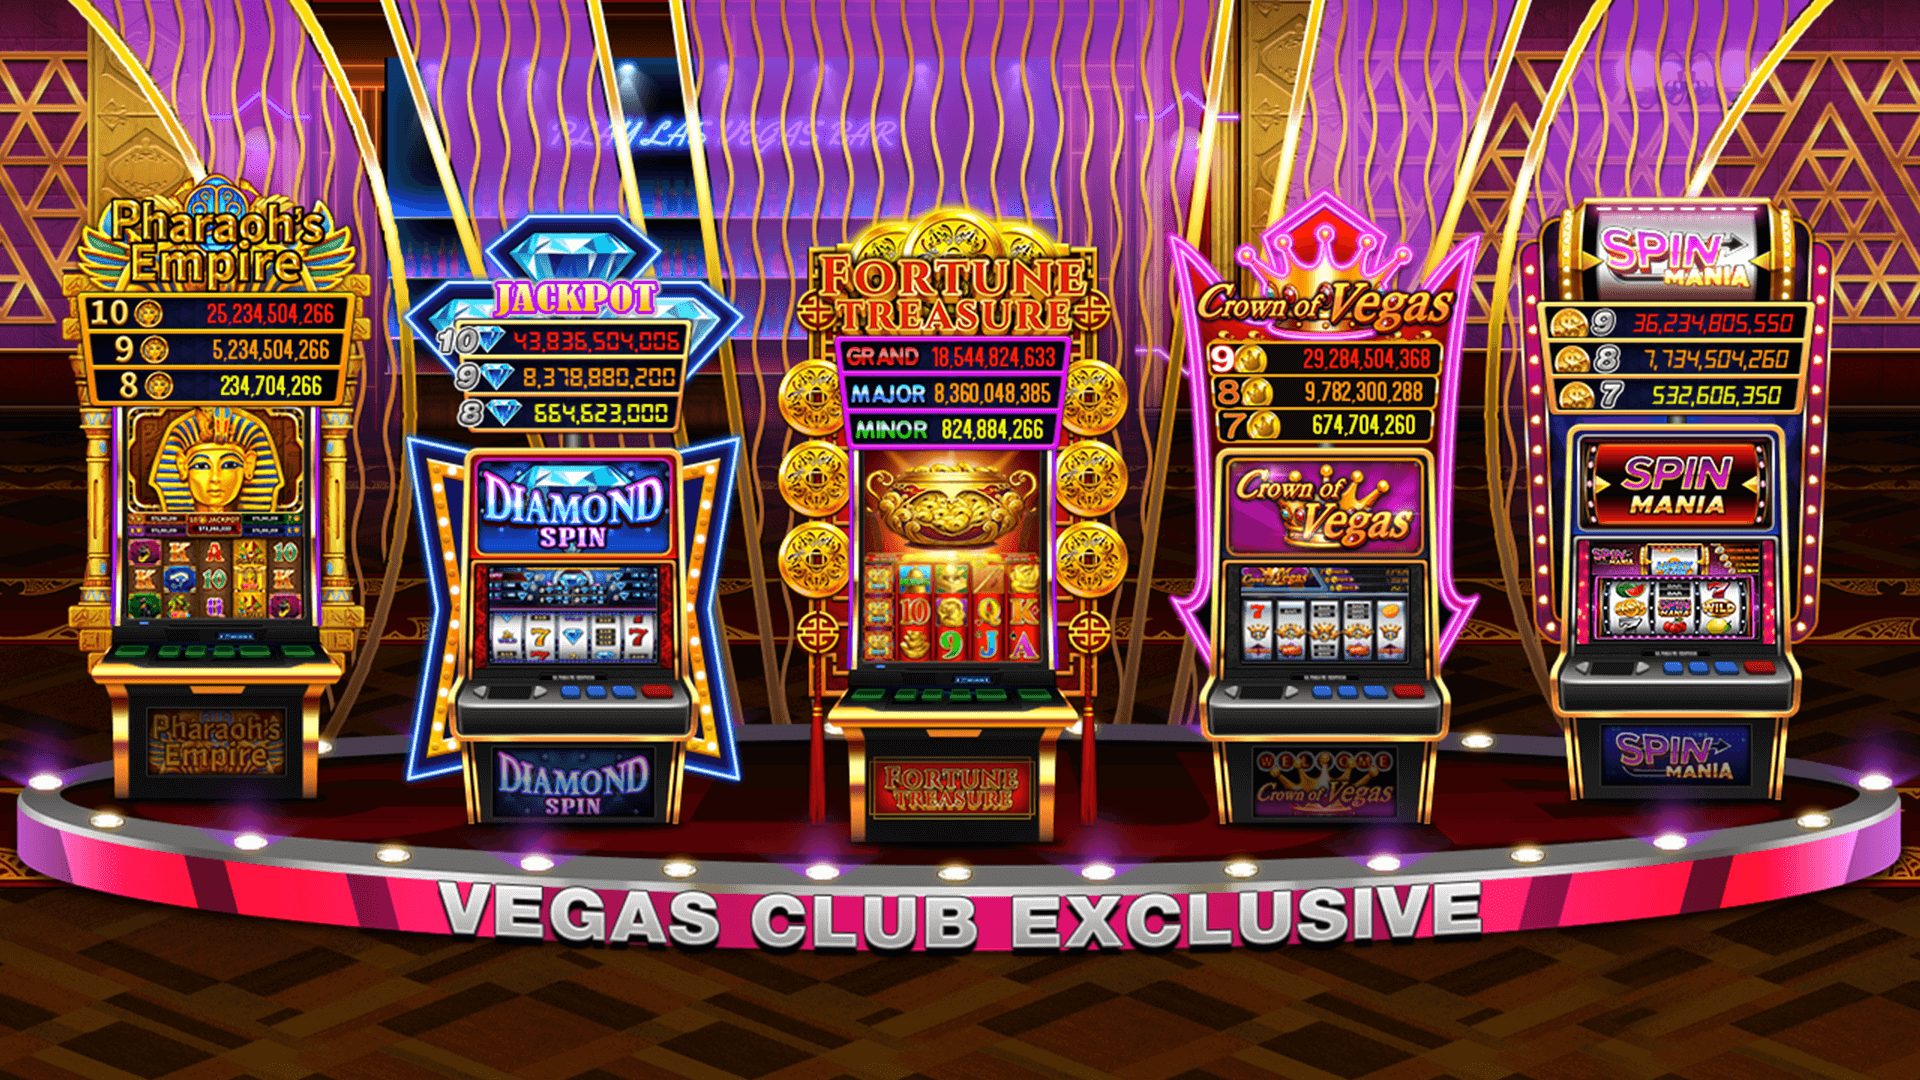 How to Play Las Vegas Slot Machines